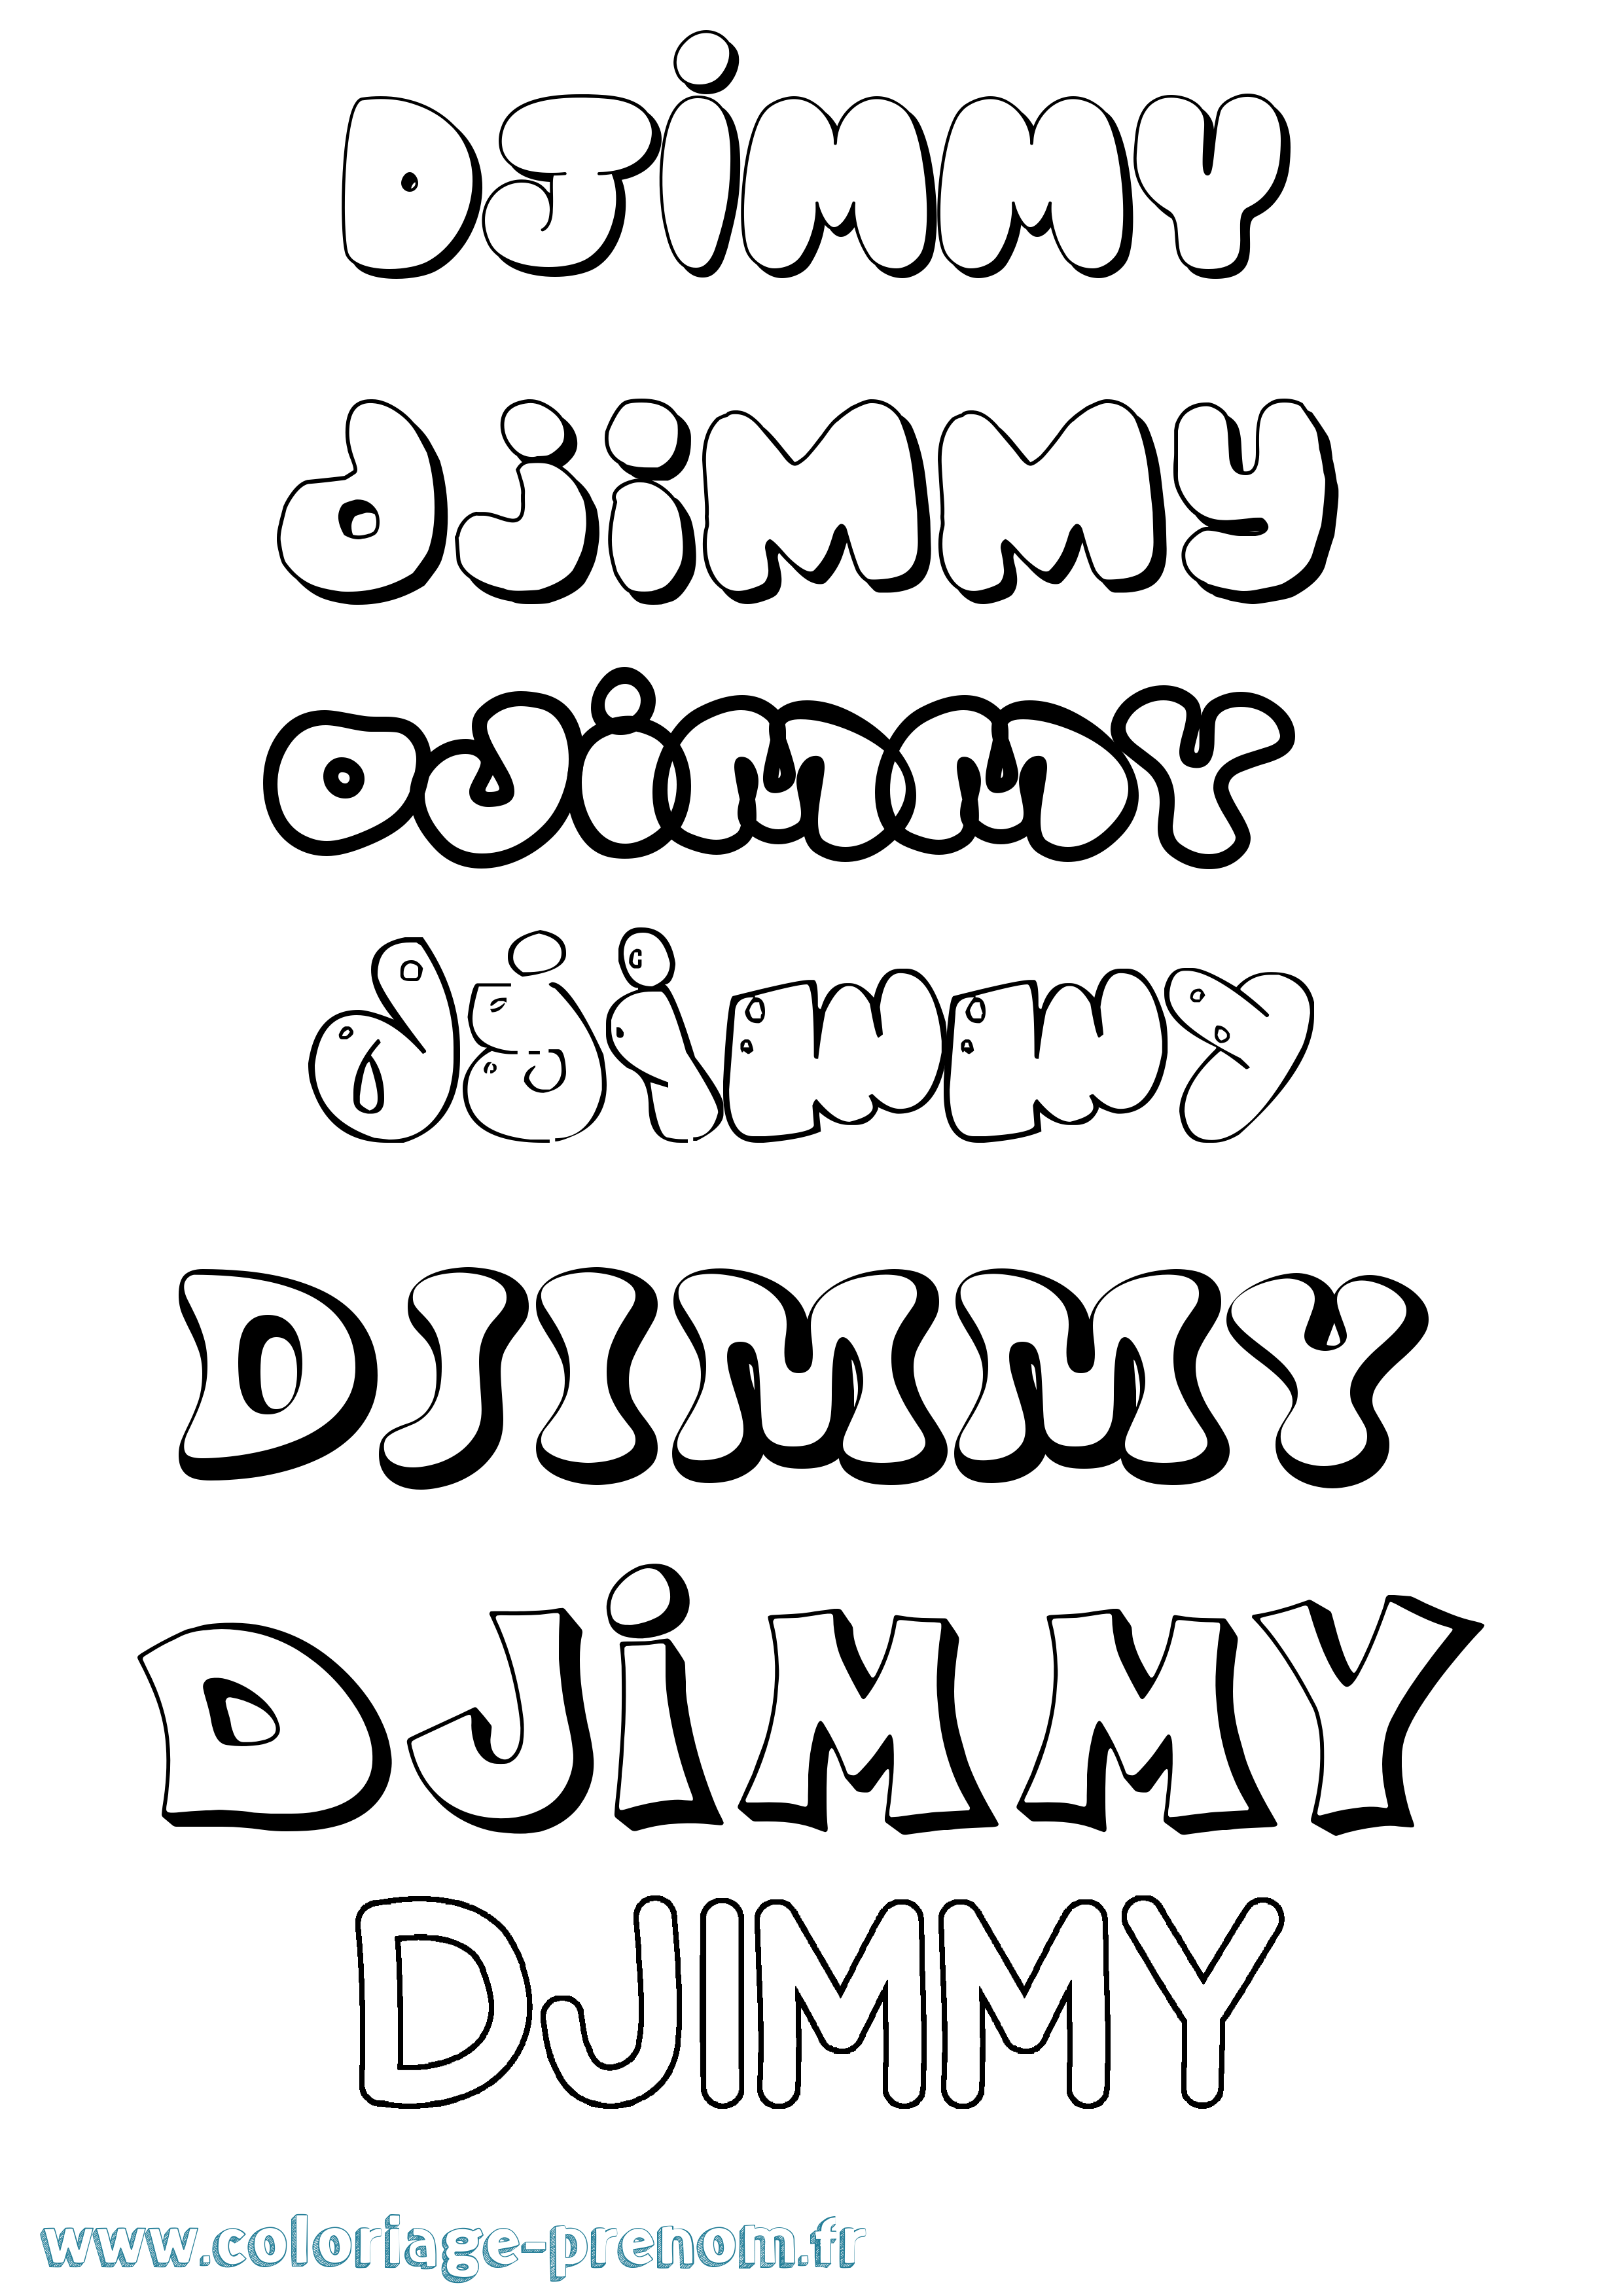 Coloriage prénom Djimmy Bubble